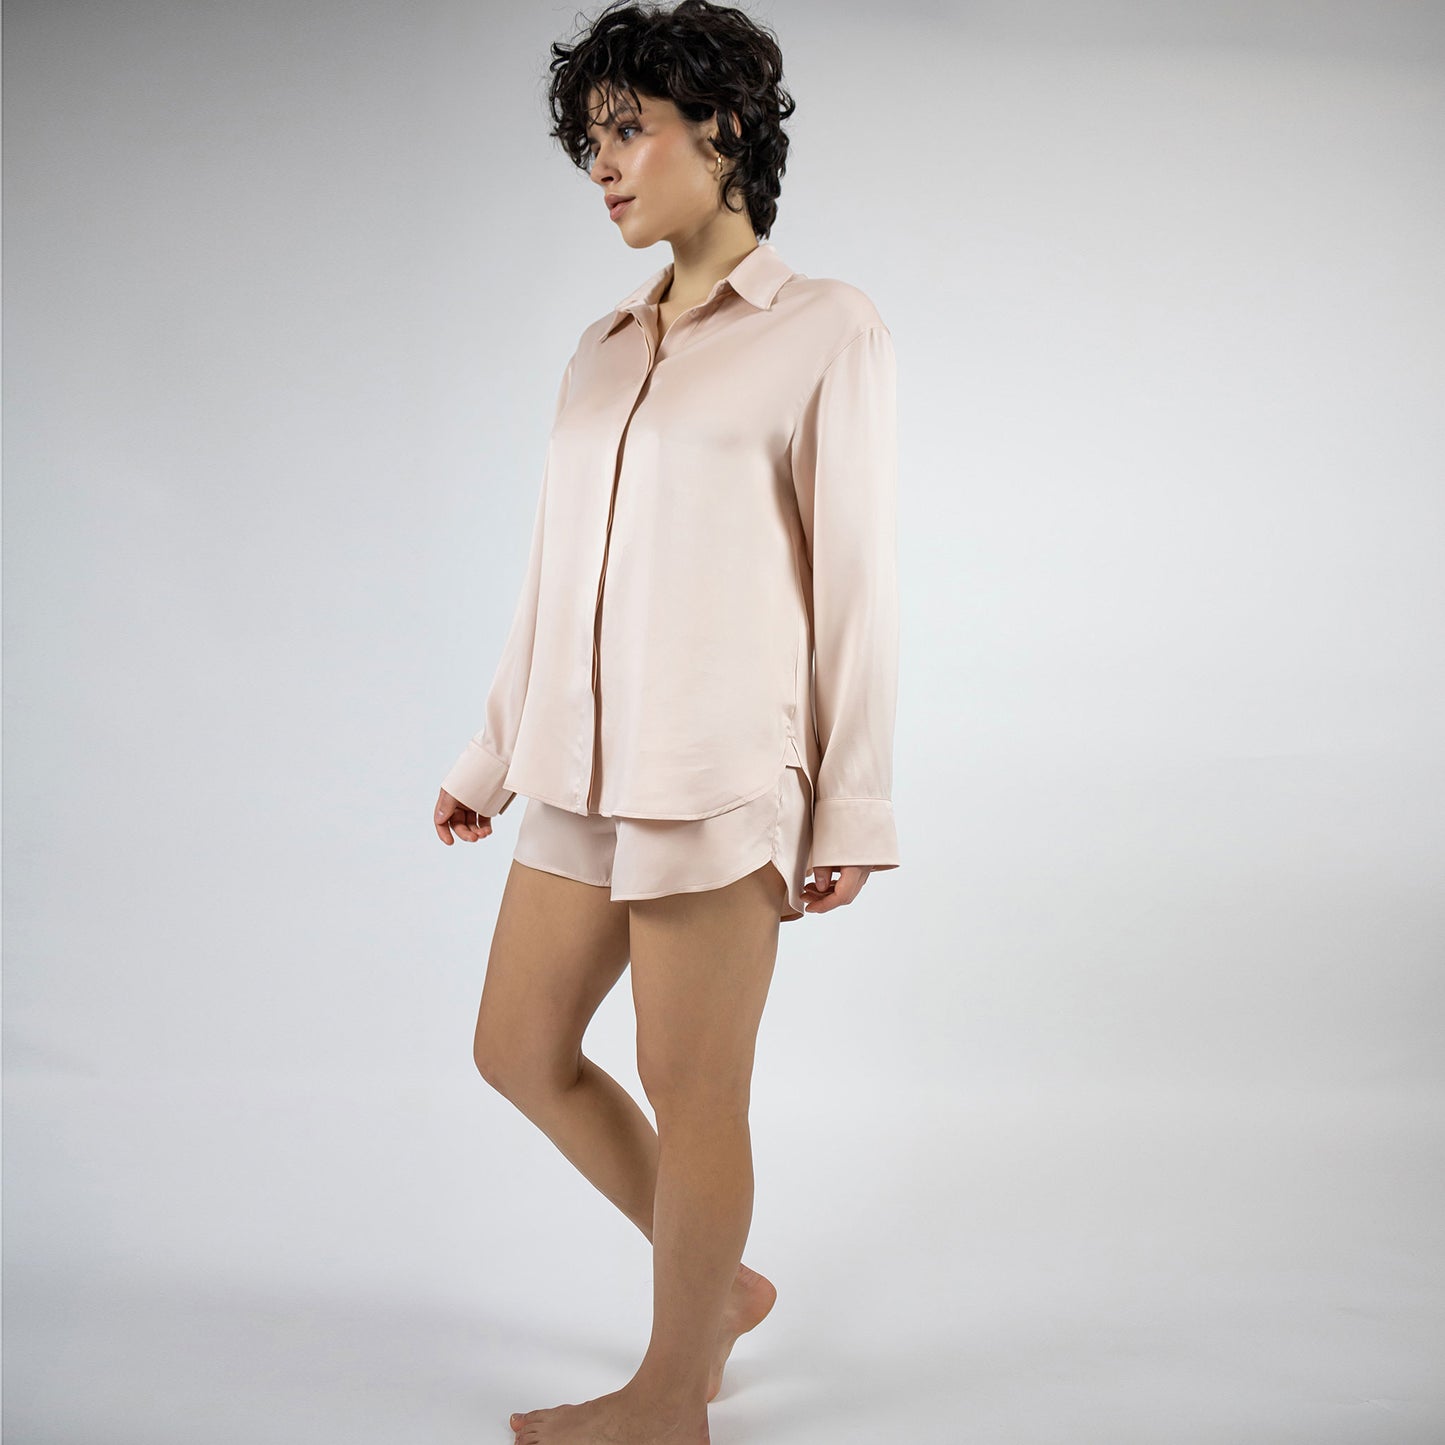 Silk Dreamscape Shorts in Transcendent Pink colour